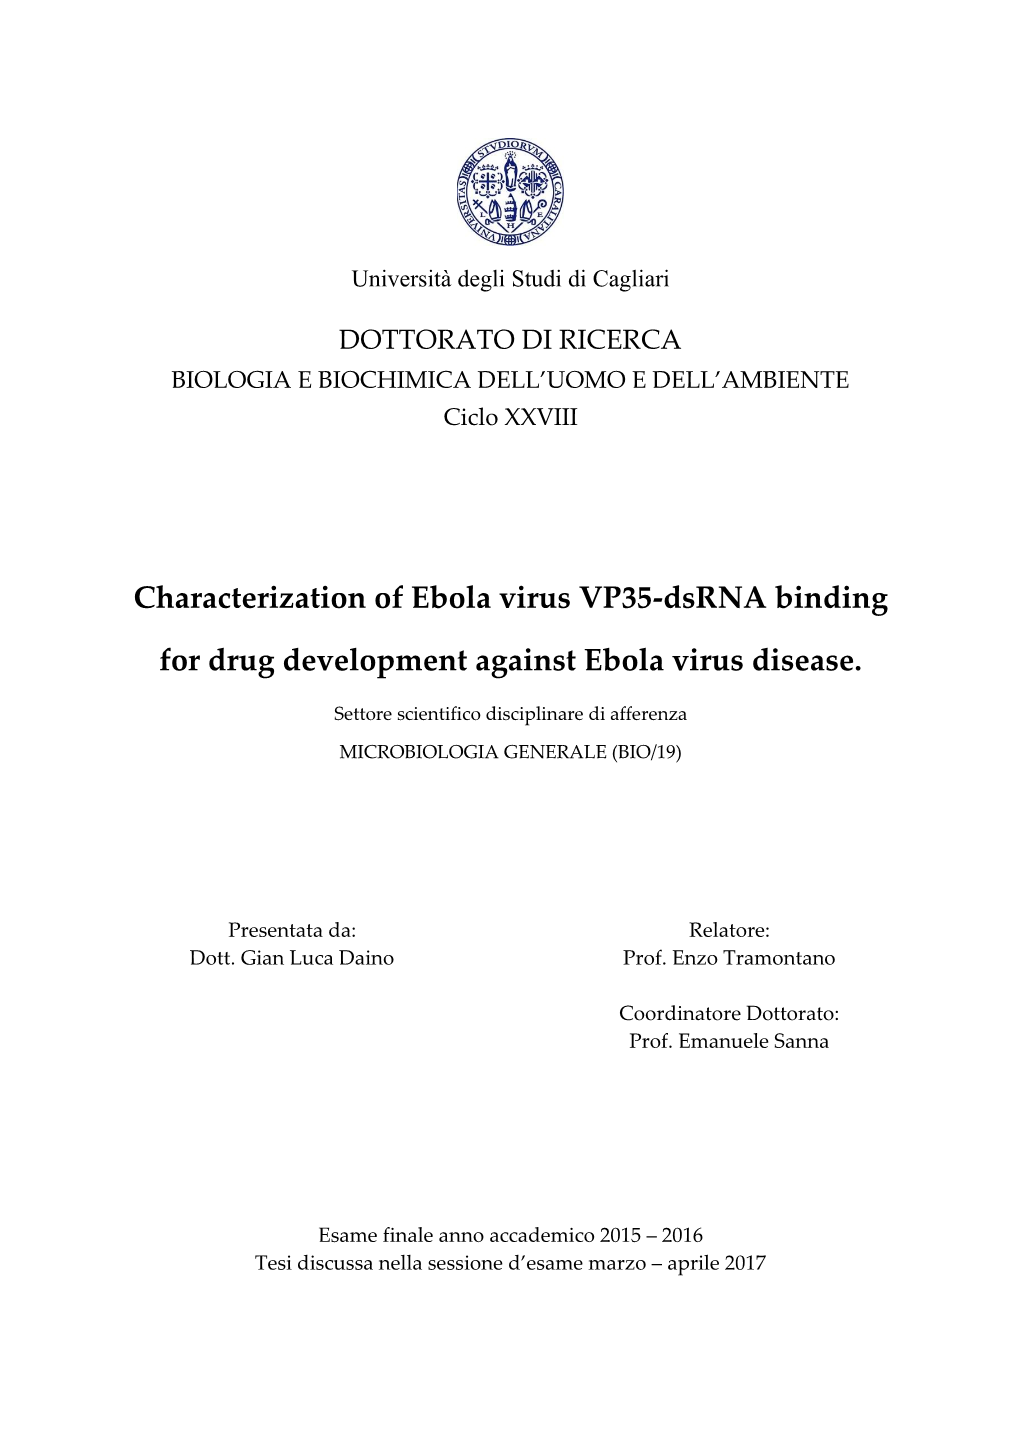 Characterization of Ebola Virus VP35-Dsrna Binding for Drug